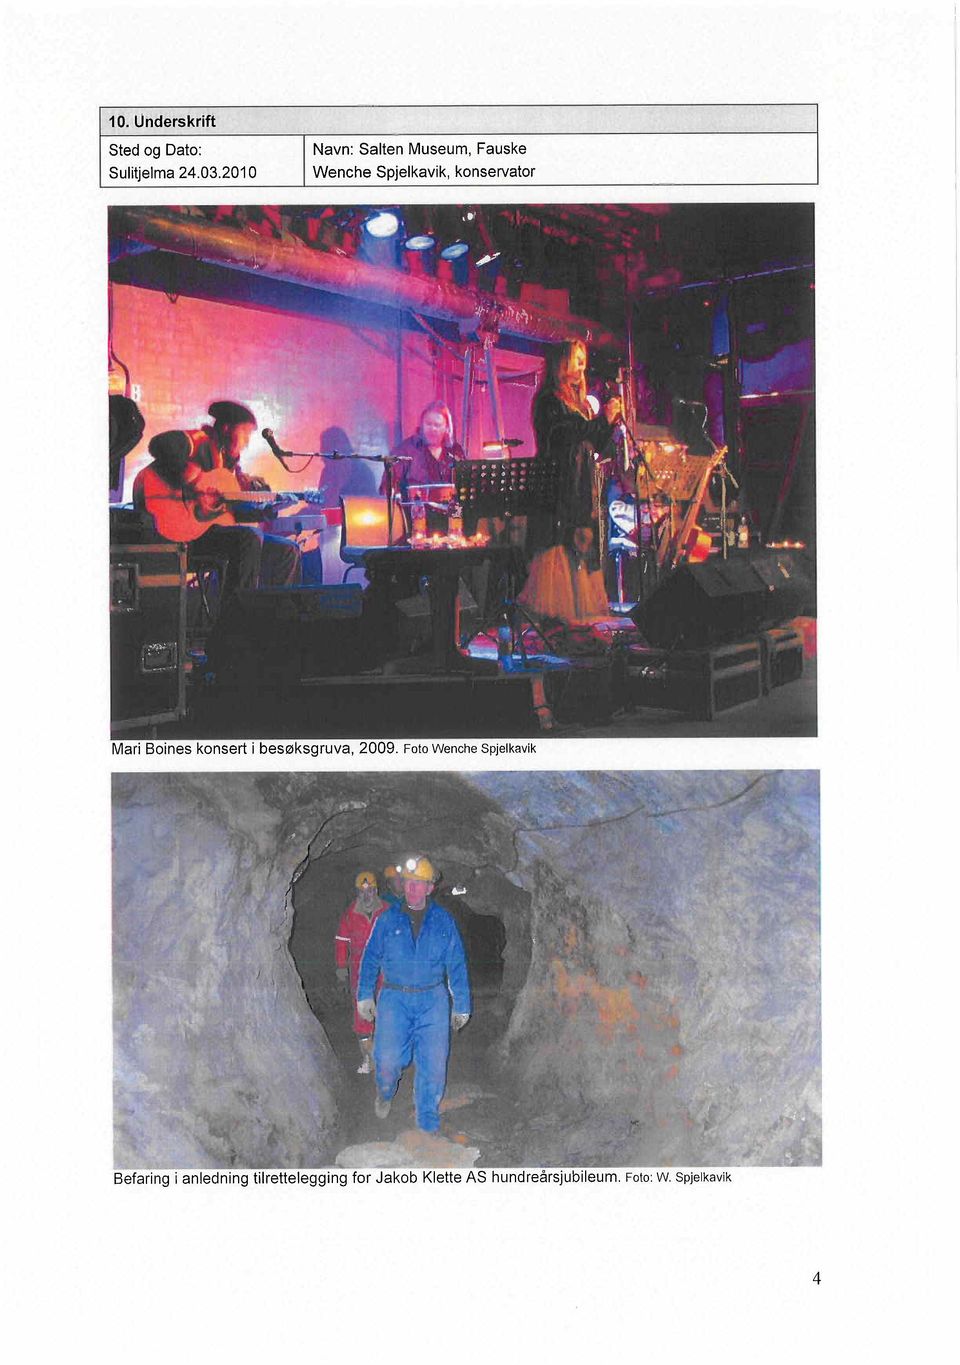 Boines konsert i besøksgruva, 2009. Foto Wenche Spjelkavik 7' i Tl l. ~t.